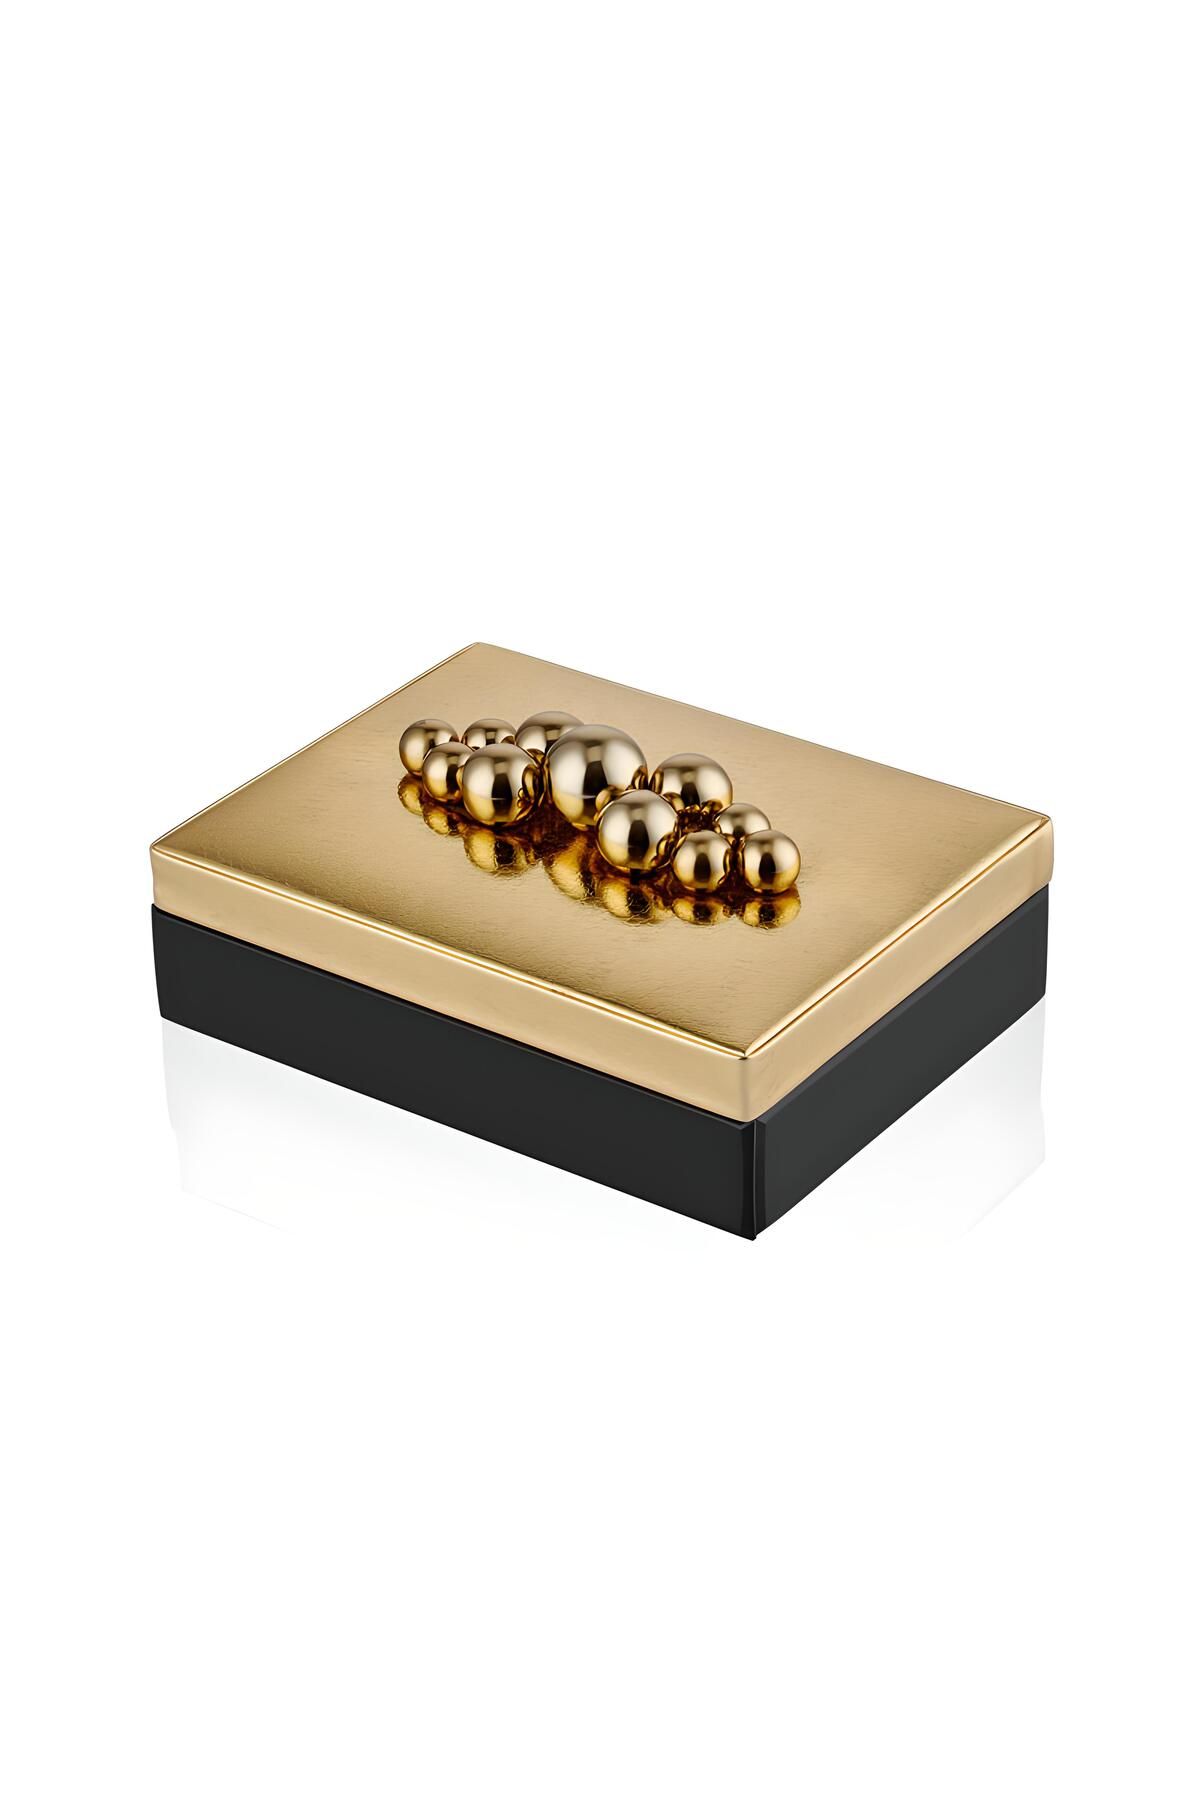 LAMEDORE ROLLING STONE BLACK GOLD LARGE RECTANGULAR BOX